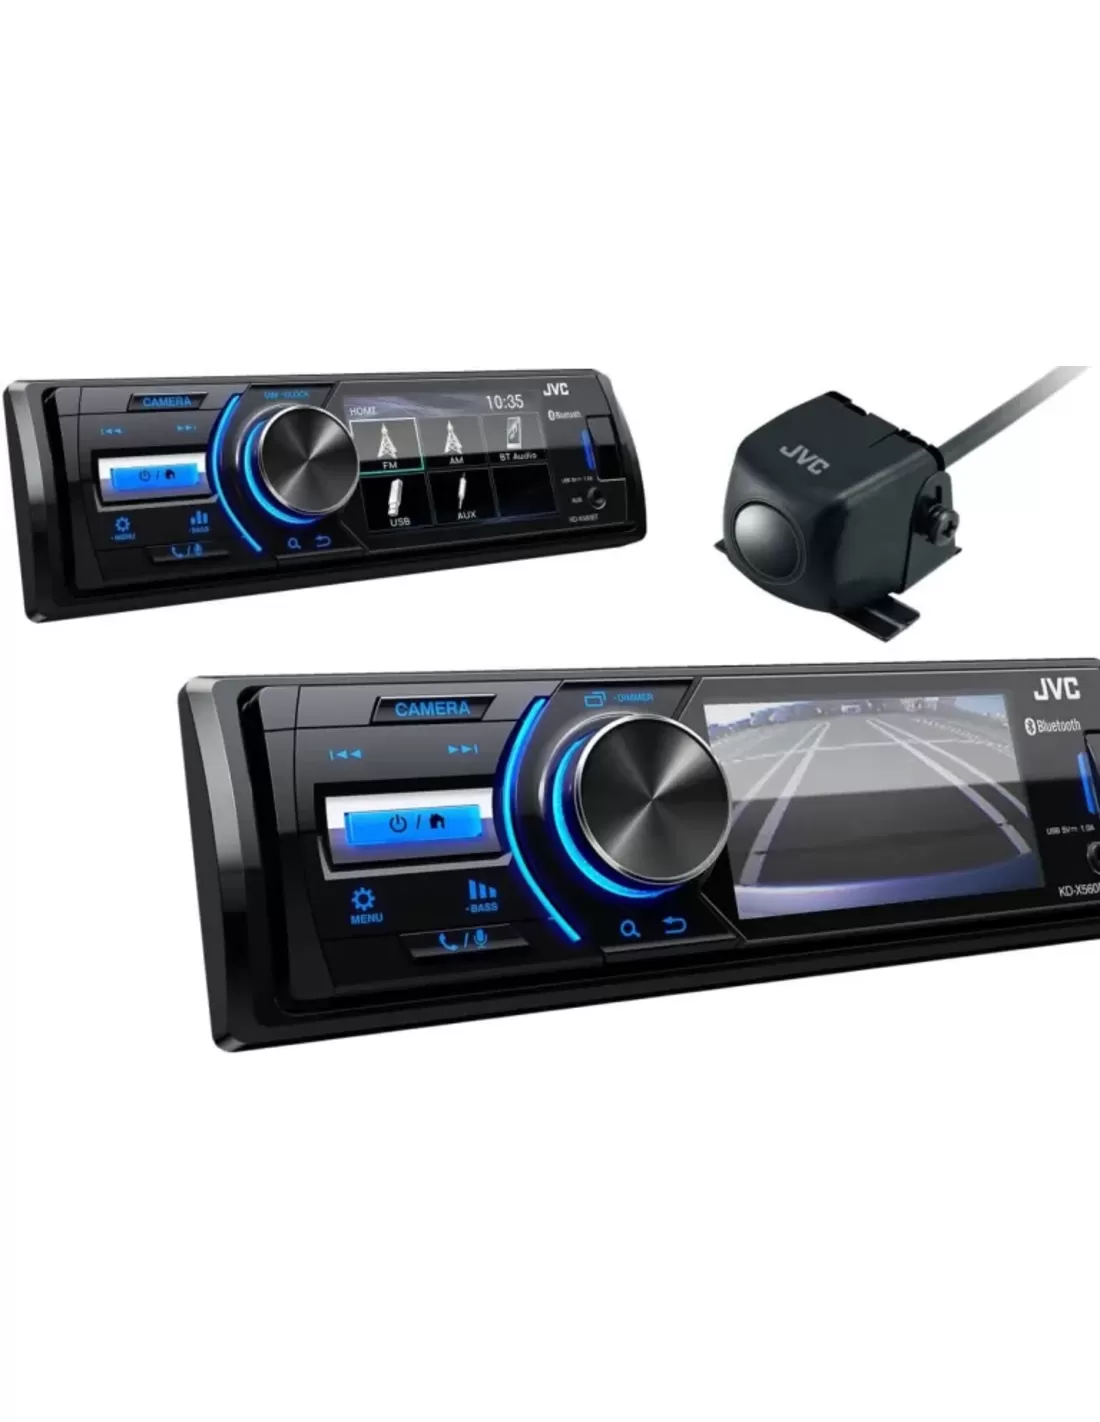 JVC KD-X560BT Premium Mechless Tuner, Car Radio, with 3 Screen, Bluetooth,  USB Input, AUX, Rear Camera Input